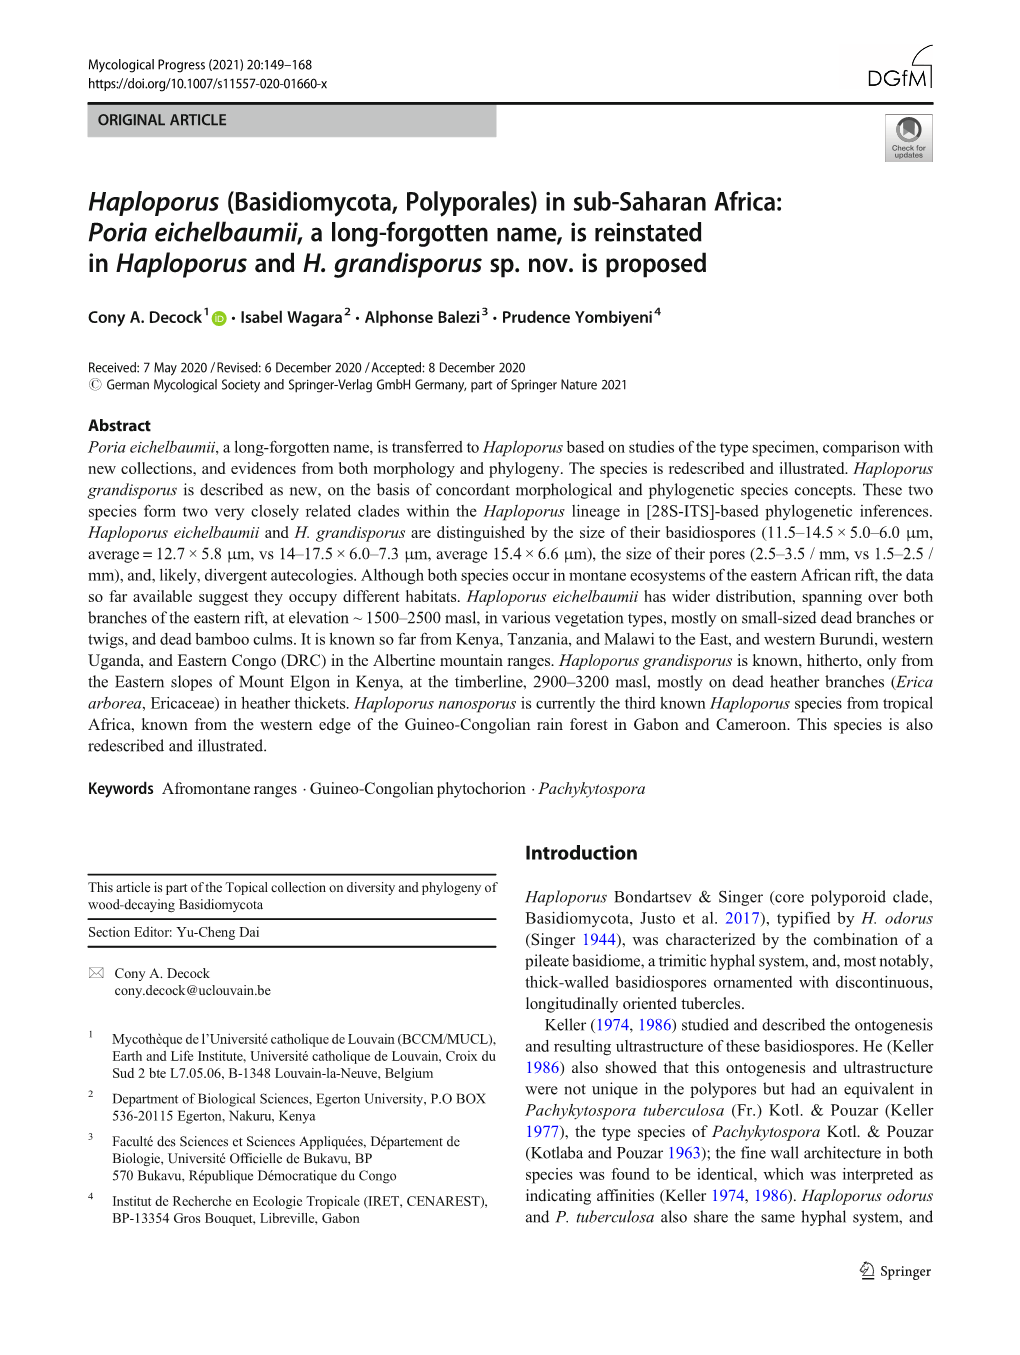 Haploporus (Basidiomycota, Polyporales) in Sub-Saharan Africa: Poria Eichelbaumii, a Long-Forgotten Name, Is Reinstated in Haploporus and H